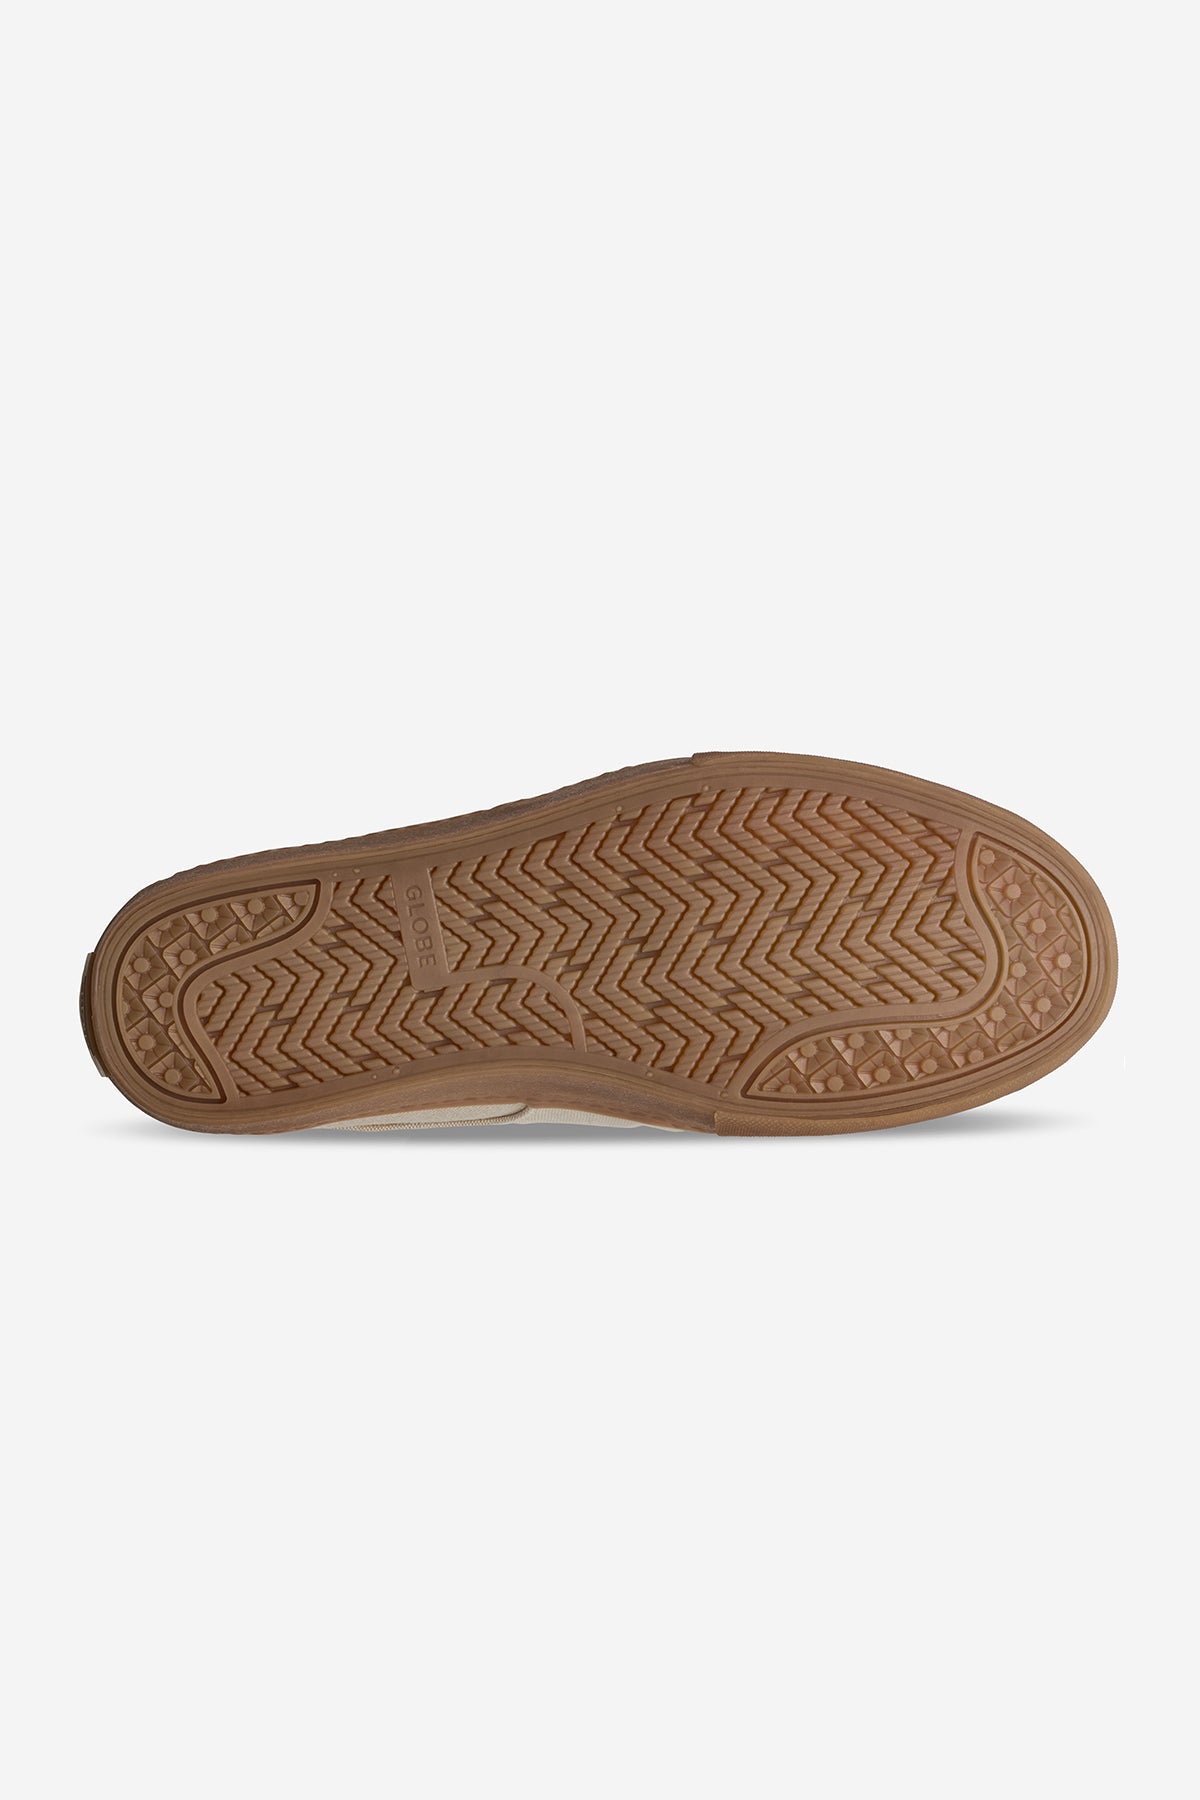 Globe - Liaizon - Hemp/Regrind Gum - skateboard Zapatos